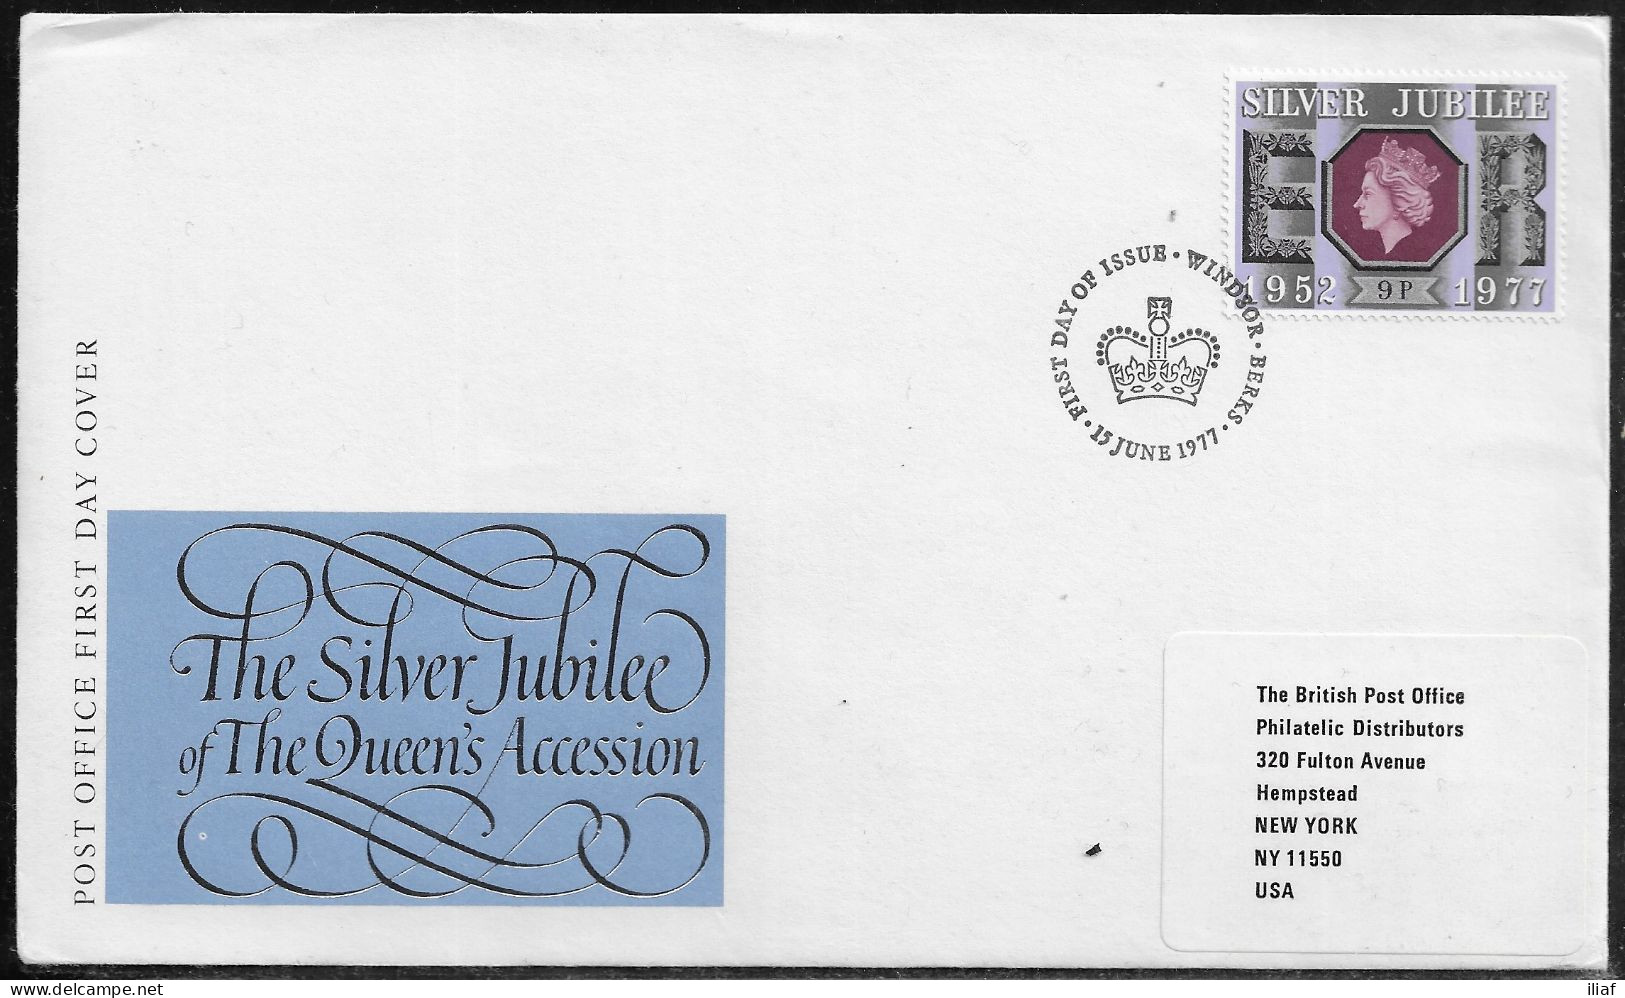 United Kingdom Of Great Britain.  FDC Sc. 811.  Silver Jubilee Of Queen Elizabeth II.  FDC Cancellation On FDC Envelope - 1971-80 Ediciones Decimal